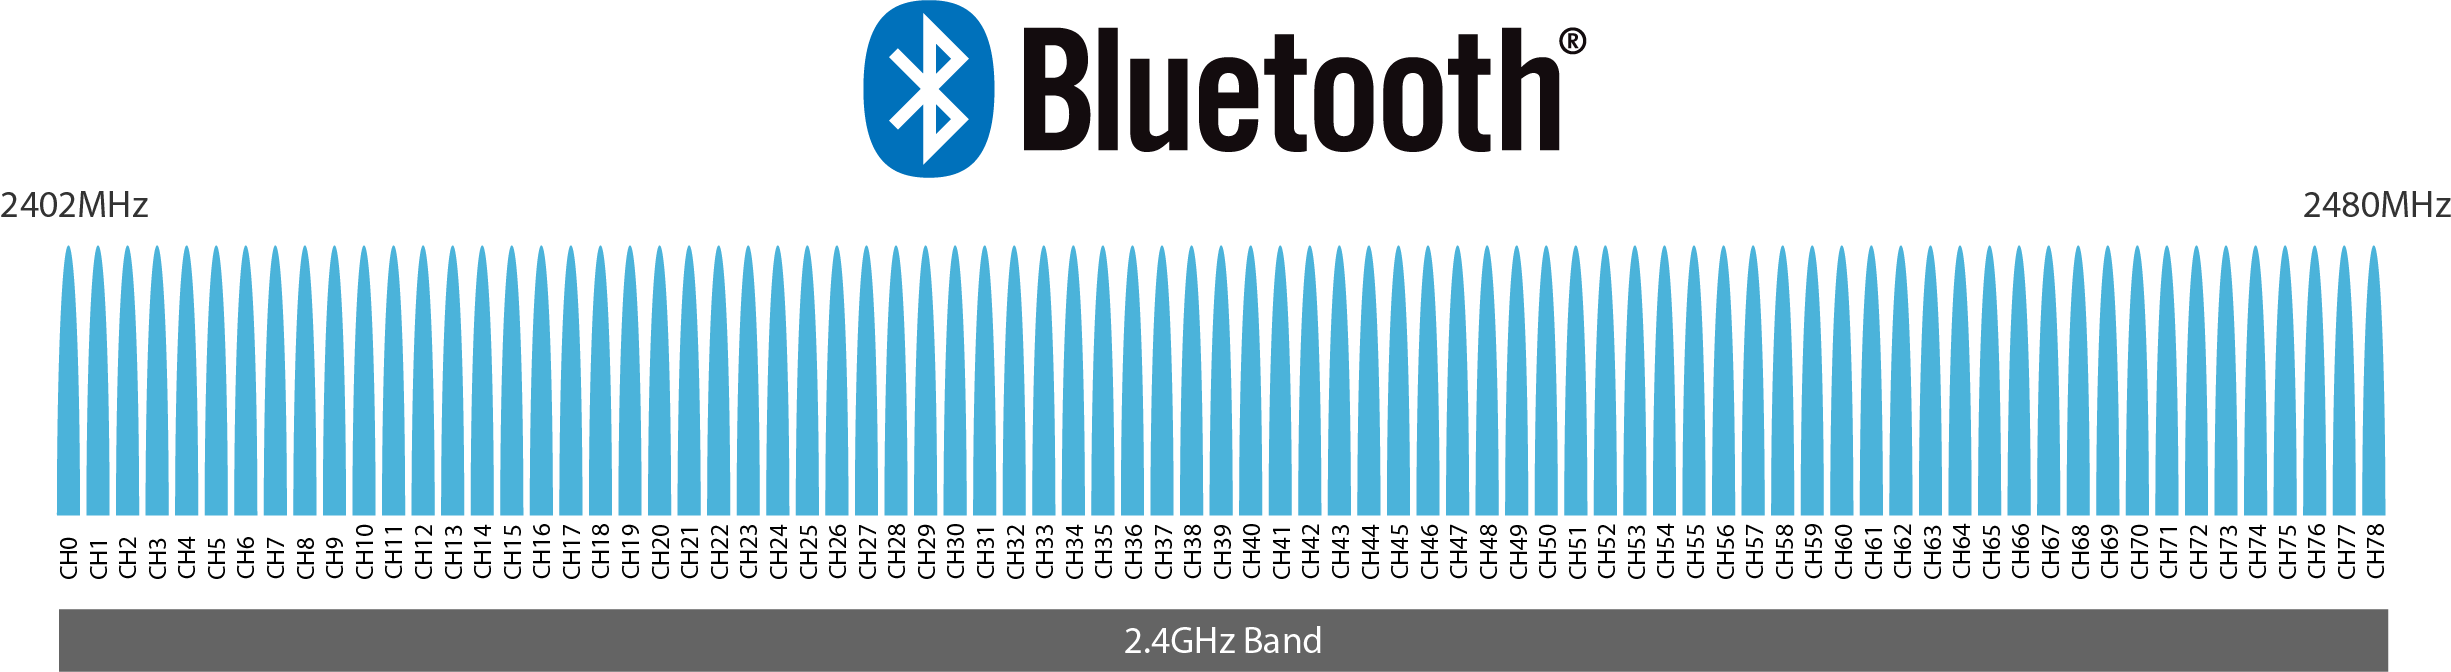 blue tooth bandwidth